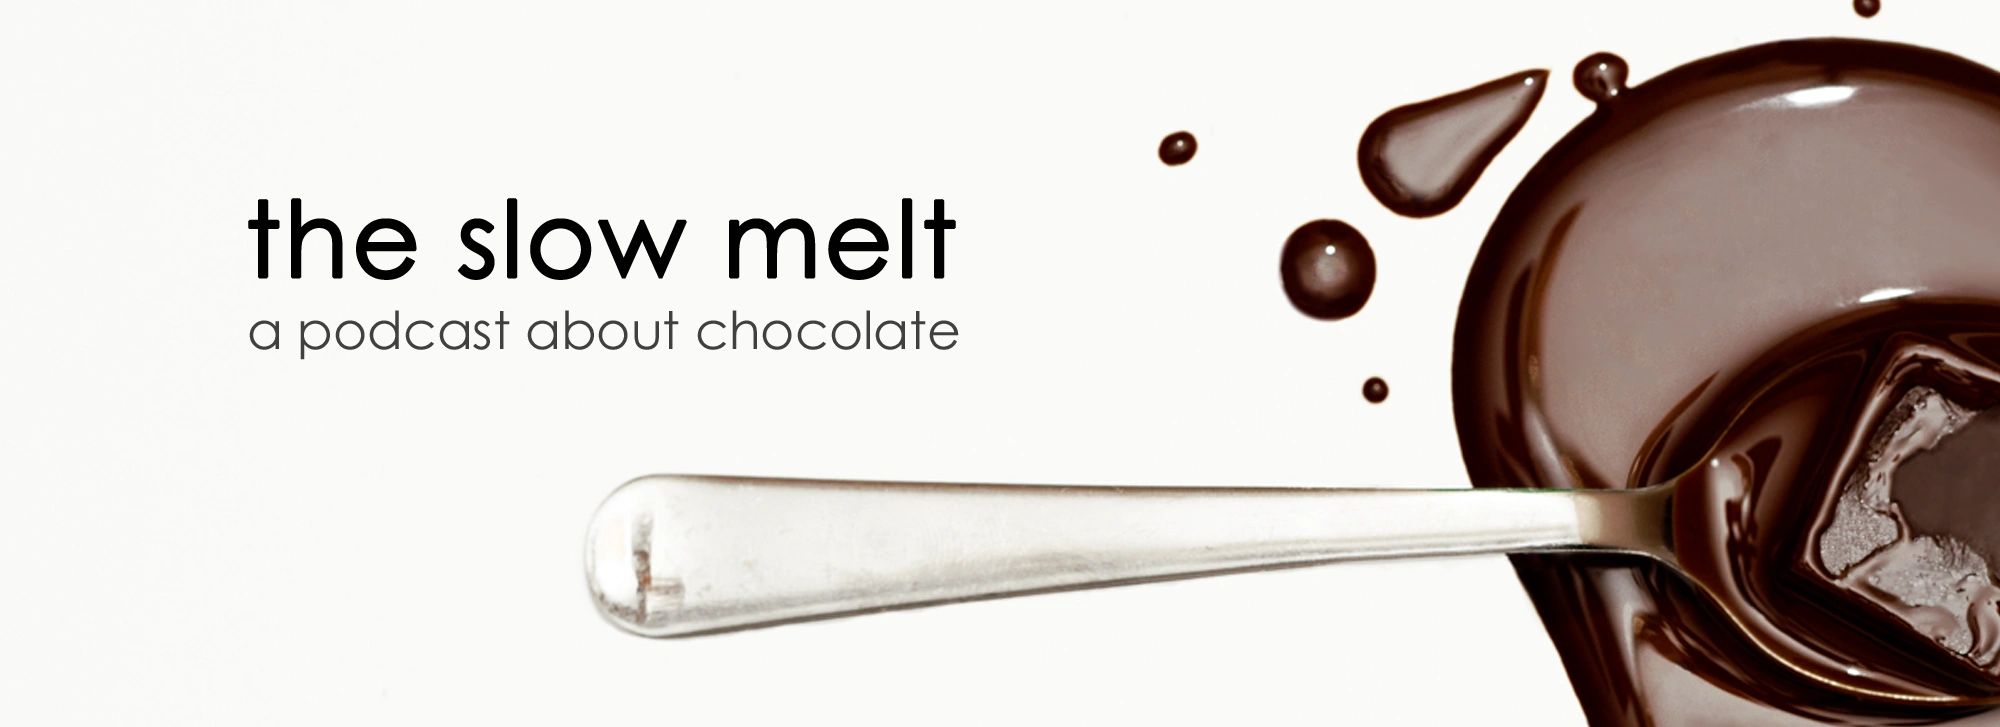 The Slow Melt chocolate podcast